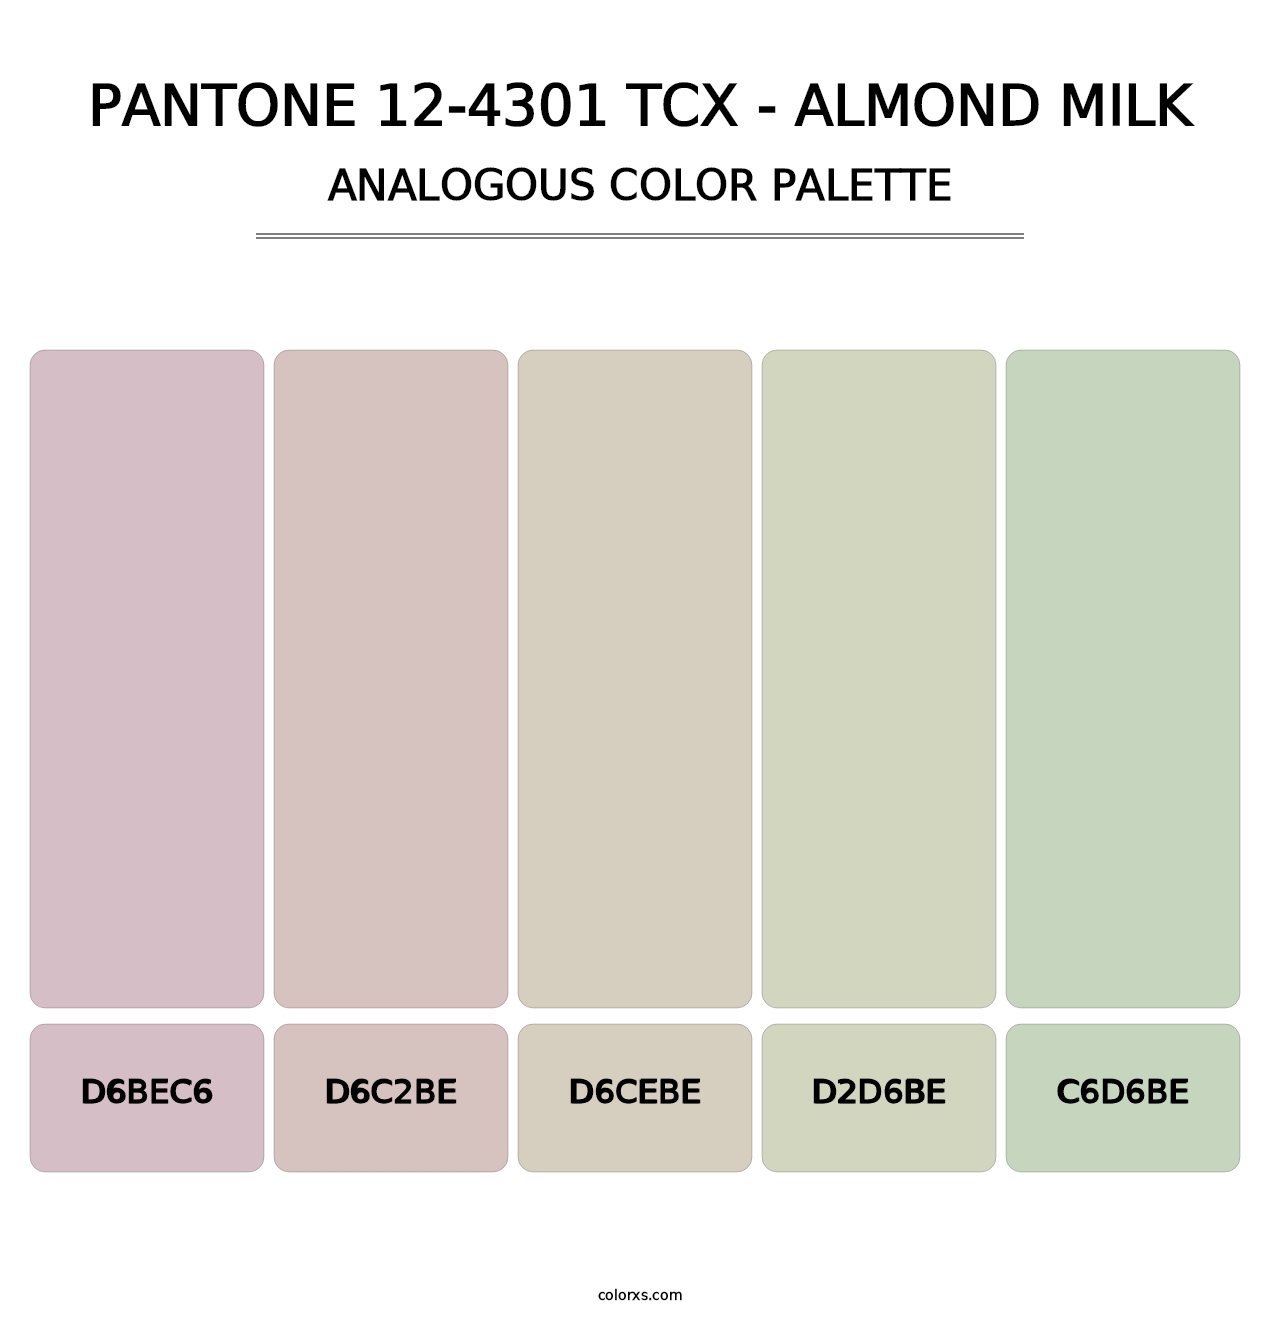 PANTONE 12-4301 TCX - Almond Milk - Analogous Color Palette